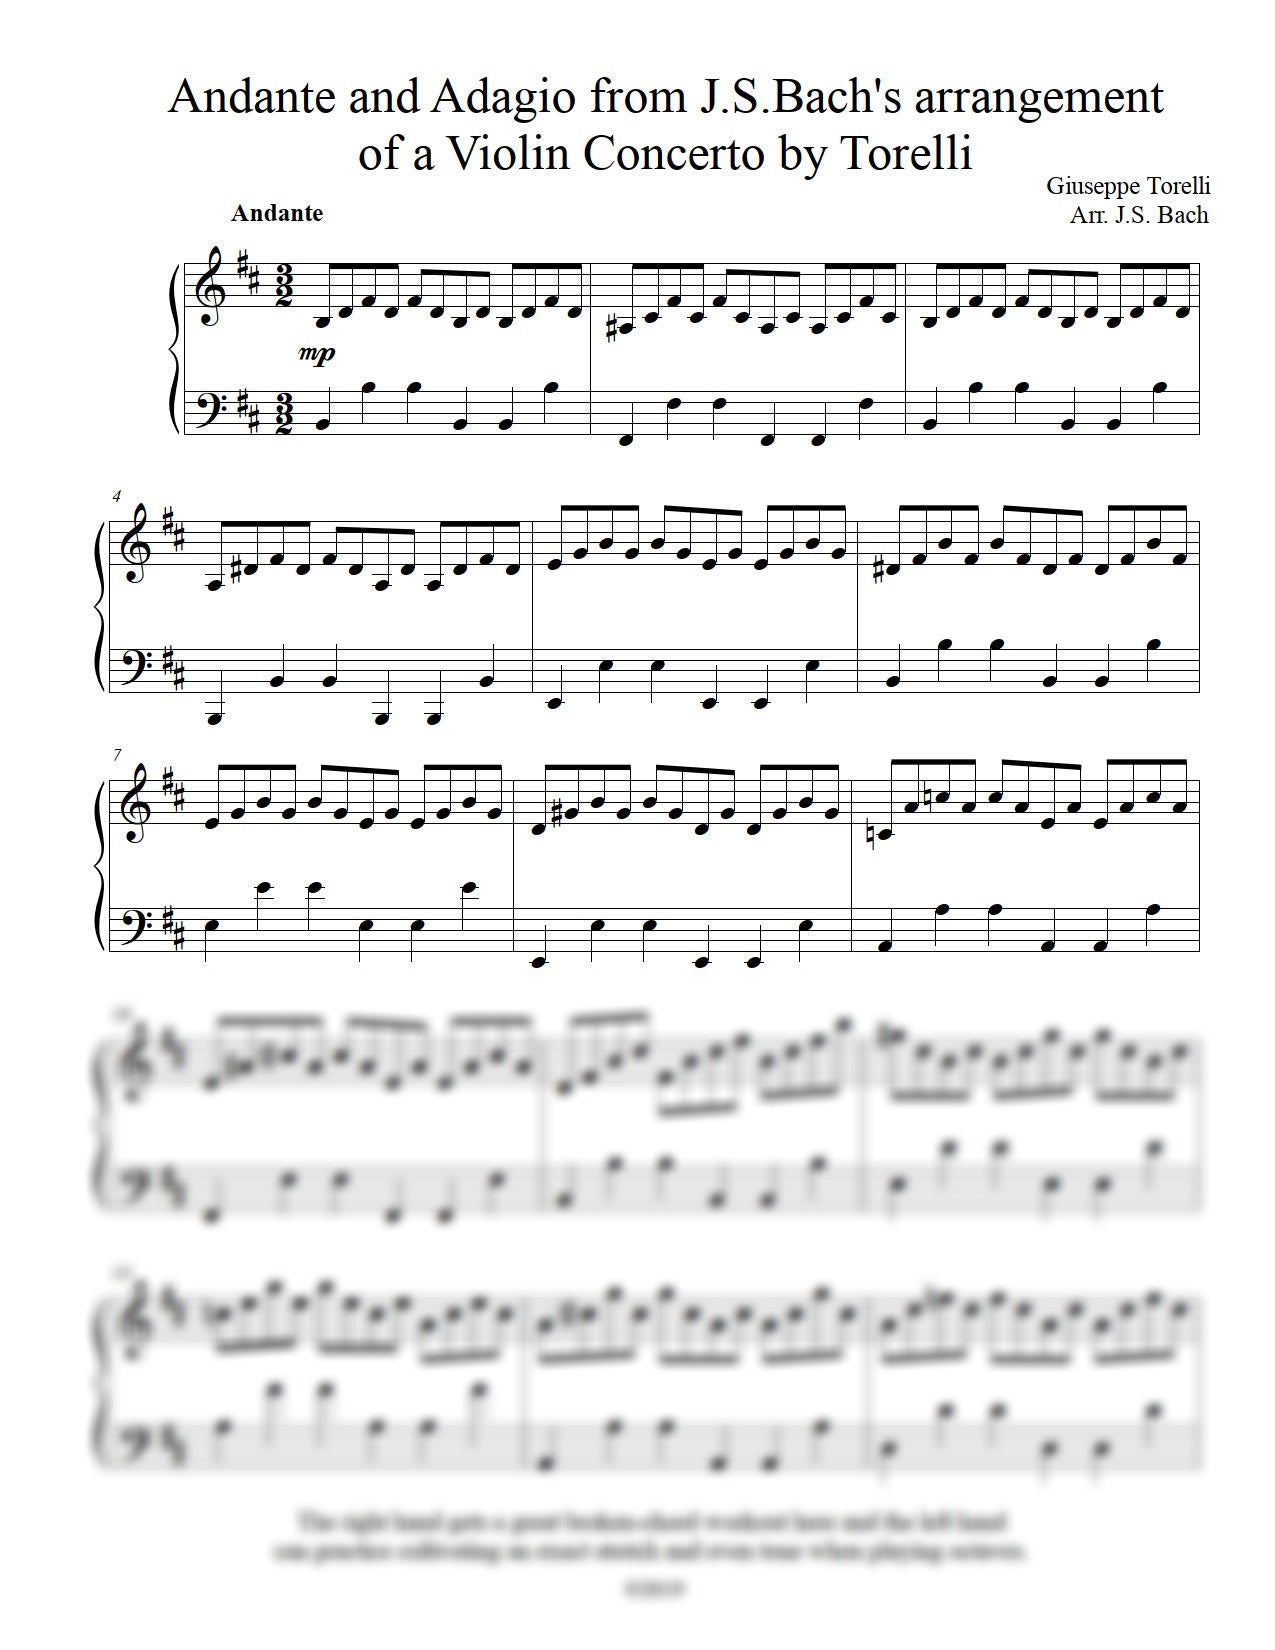 J.S. Bach: Andante and Adagio from Torelli’s Violin Concerto, BWV 979 arranged for piano by Eleonor Bindman (GPC054)